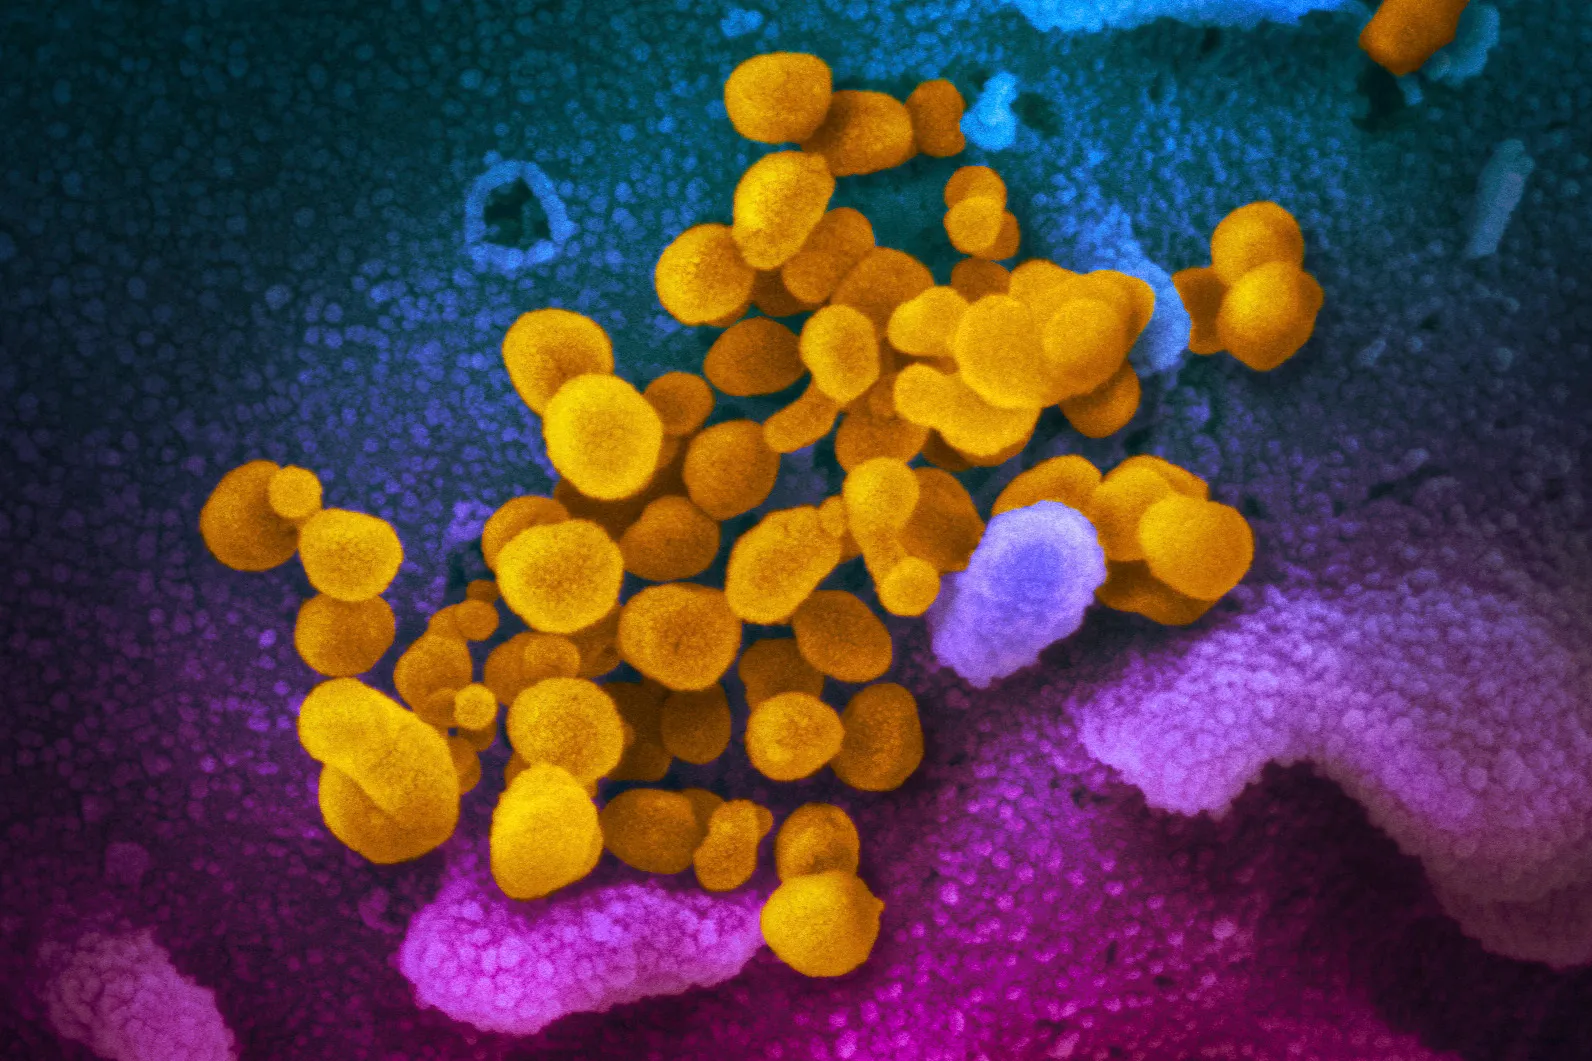 Coronavirus weakening, may disappear on its own, Italian doctor says